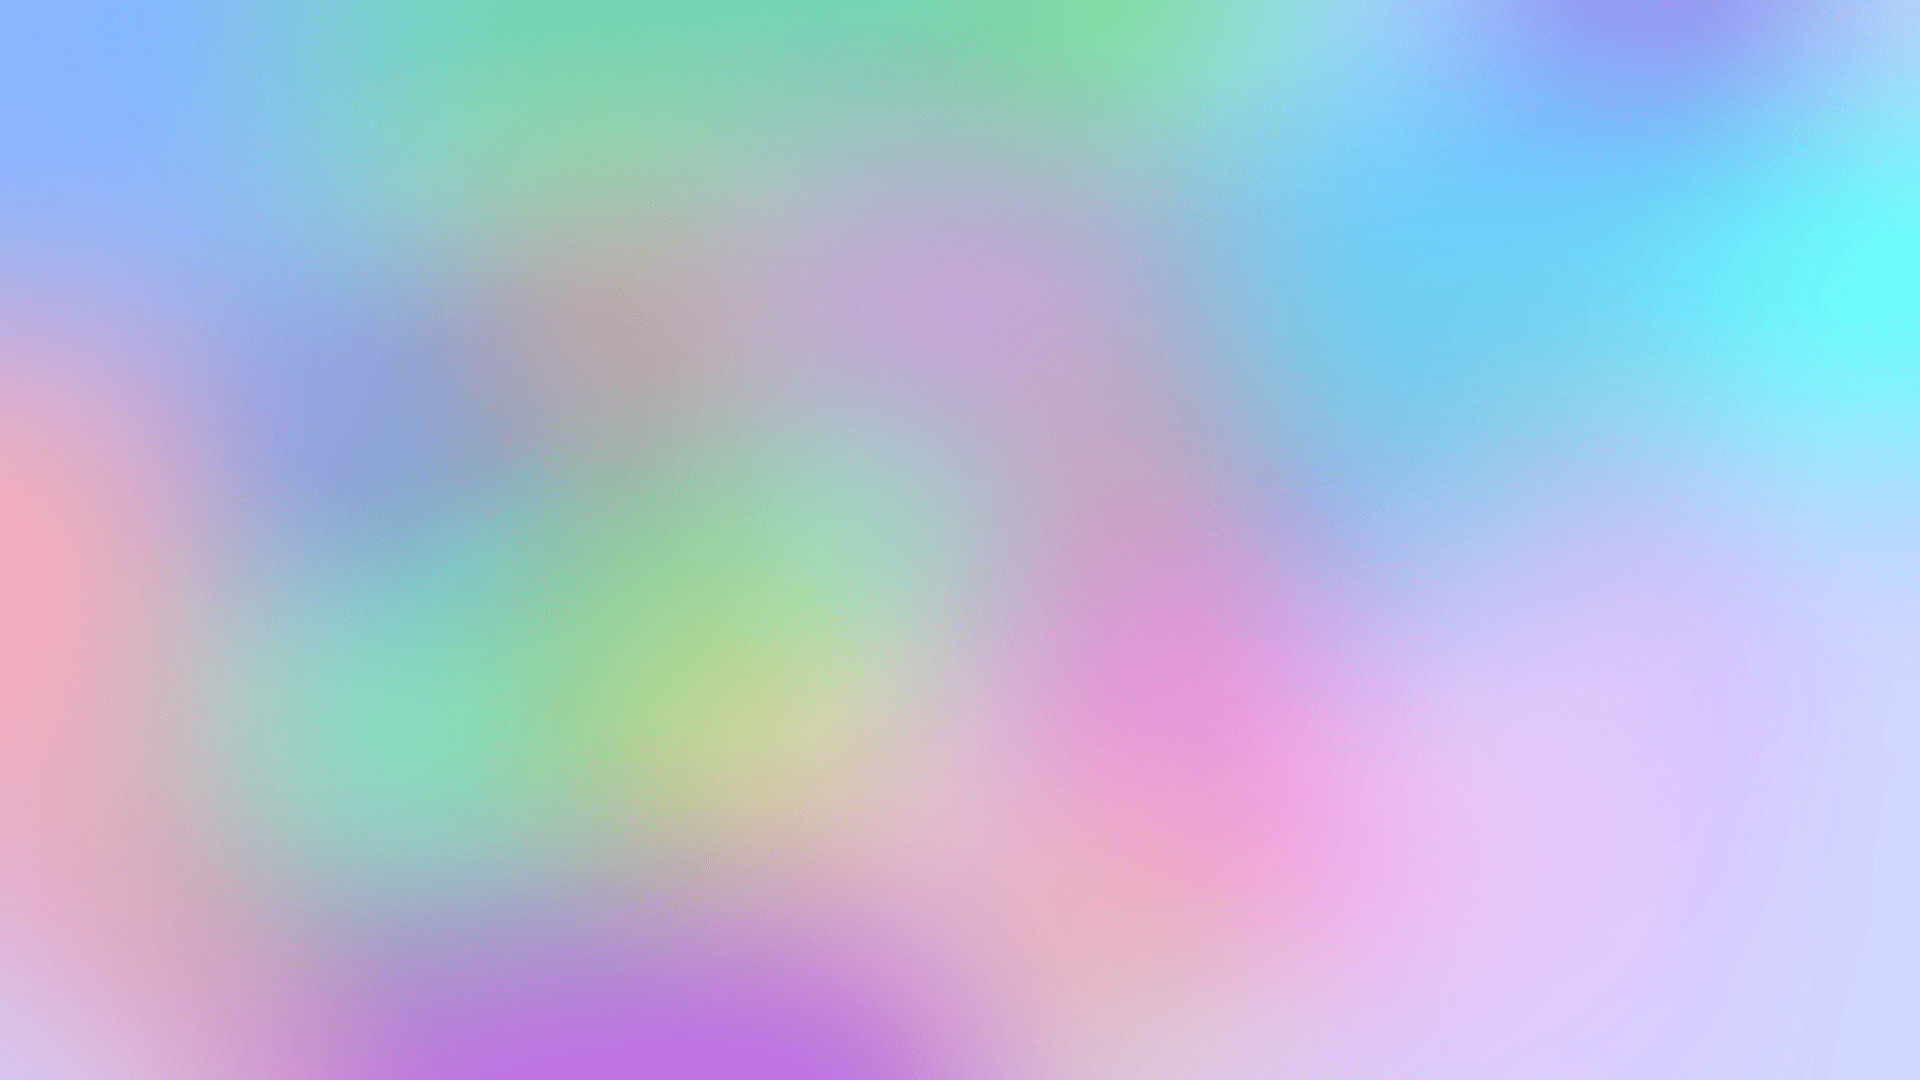 Pure Pastel Colors Wallpaper - Soft Colors Background - 1920x1080 Wallpaper  